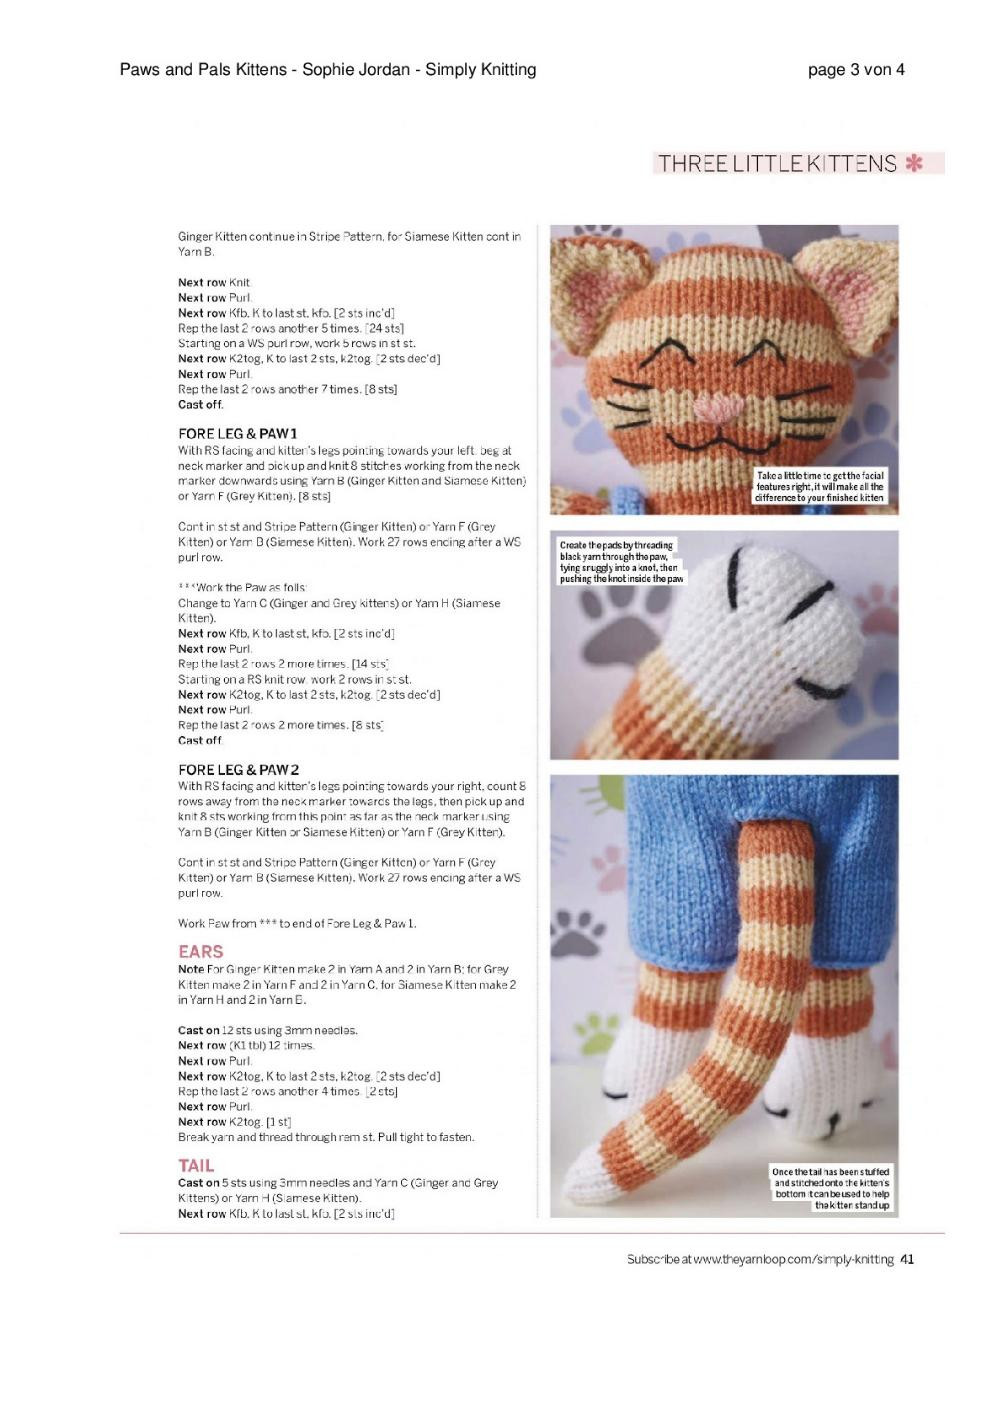 Paws and Pals Kittens - Sophie Jordan crochet pattern